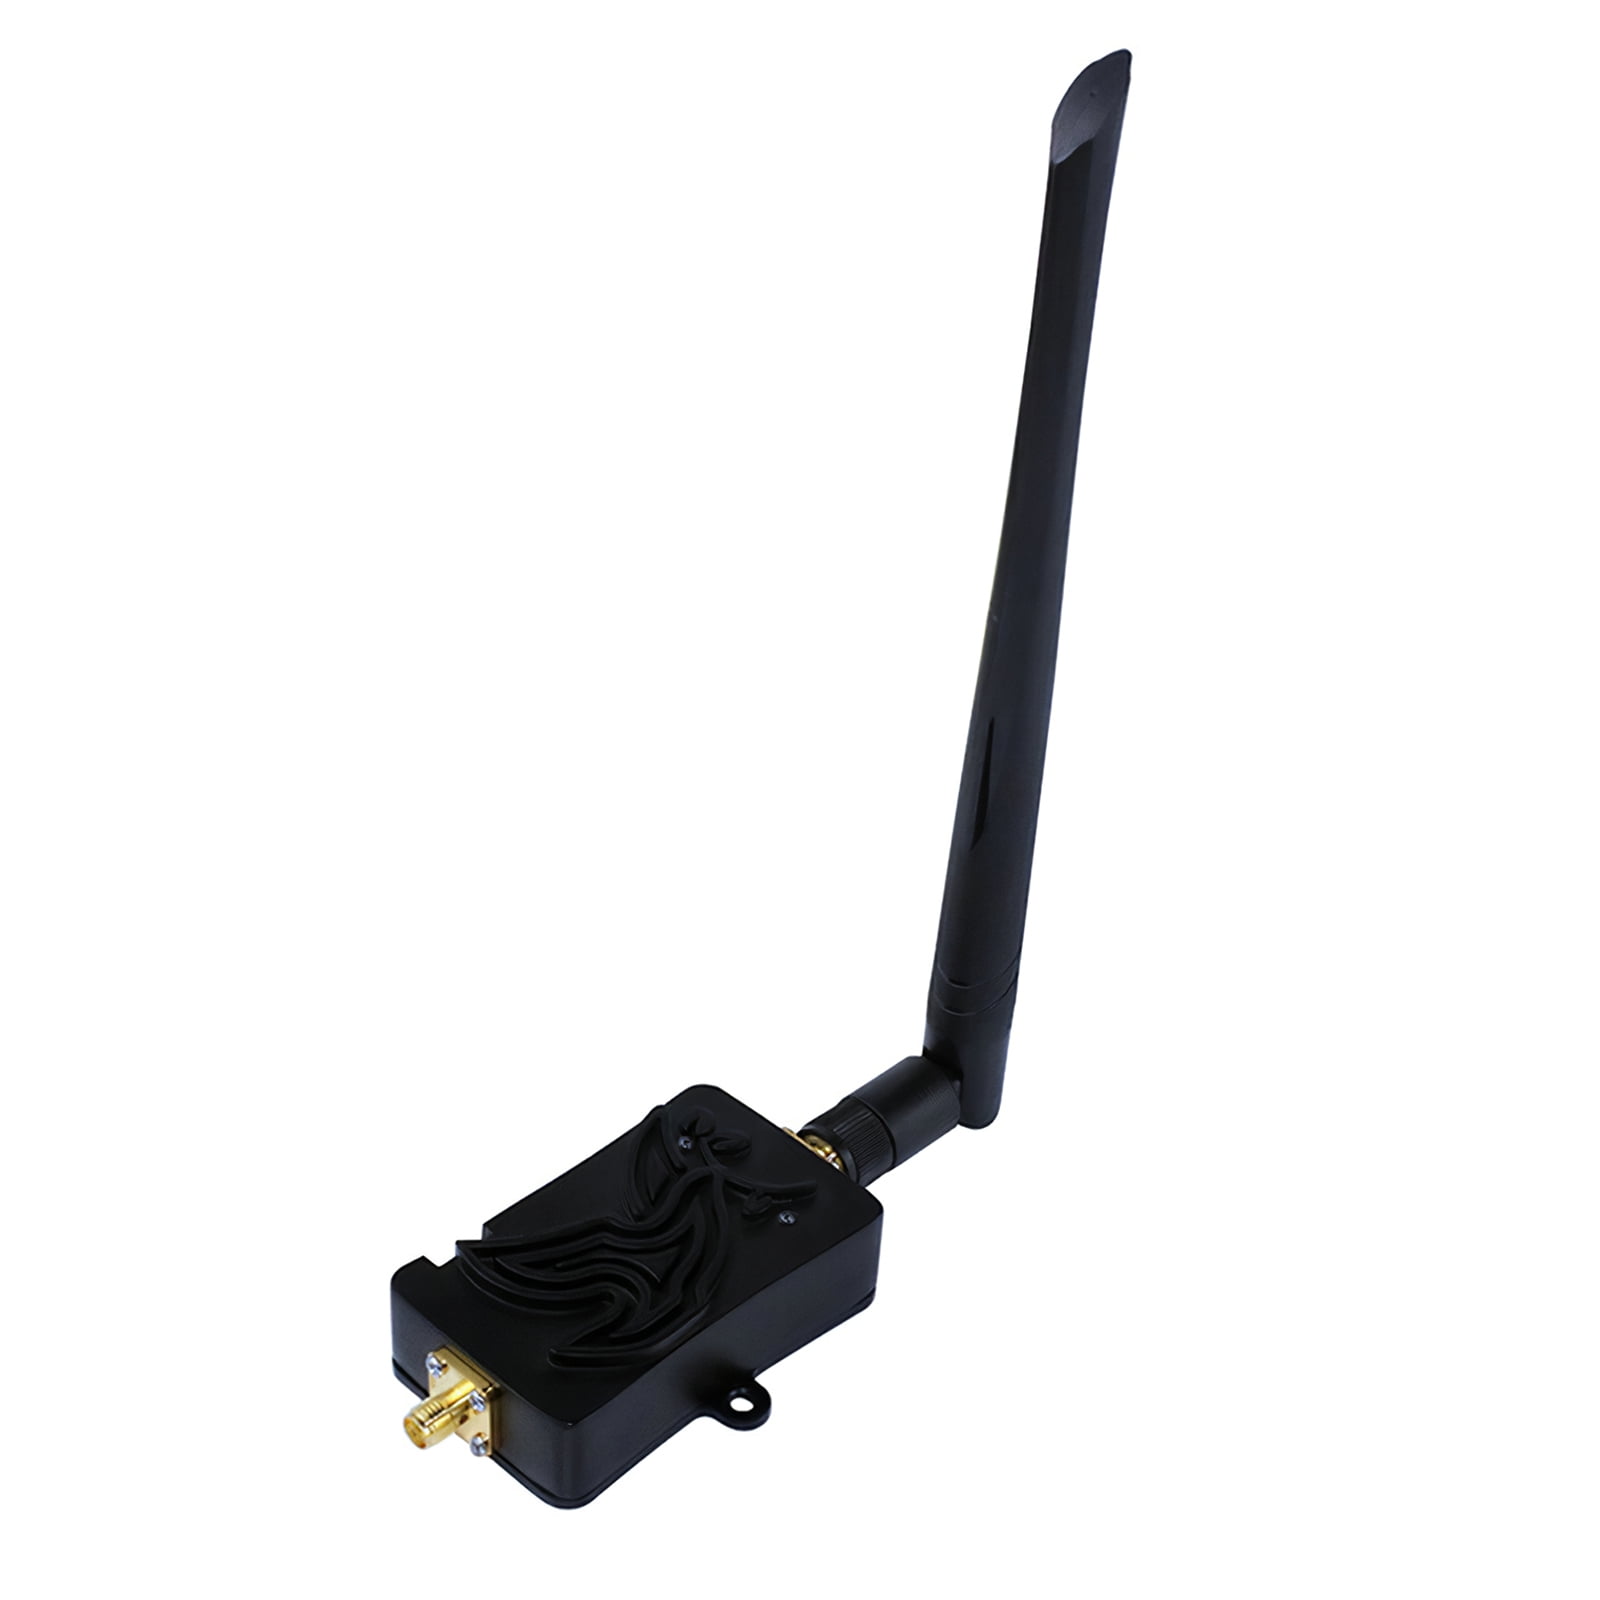 6 Antennas BlueProton ARGtek DJI Mavic Pro/Spark WiFi Signal Range Extender Kit 